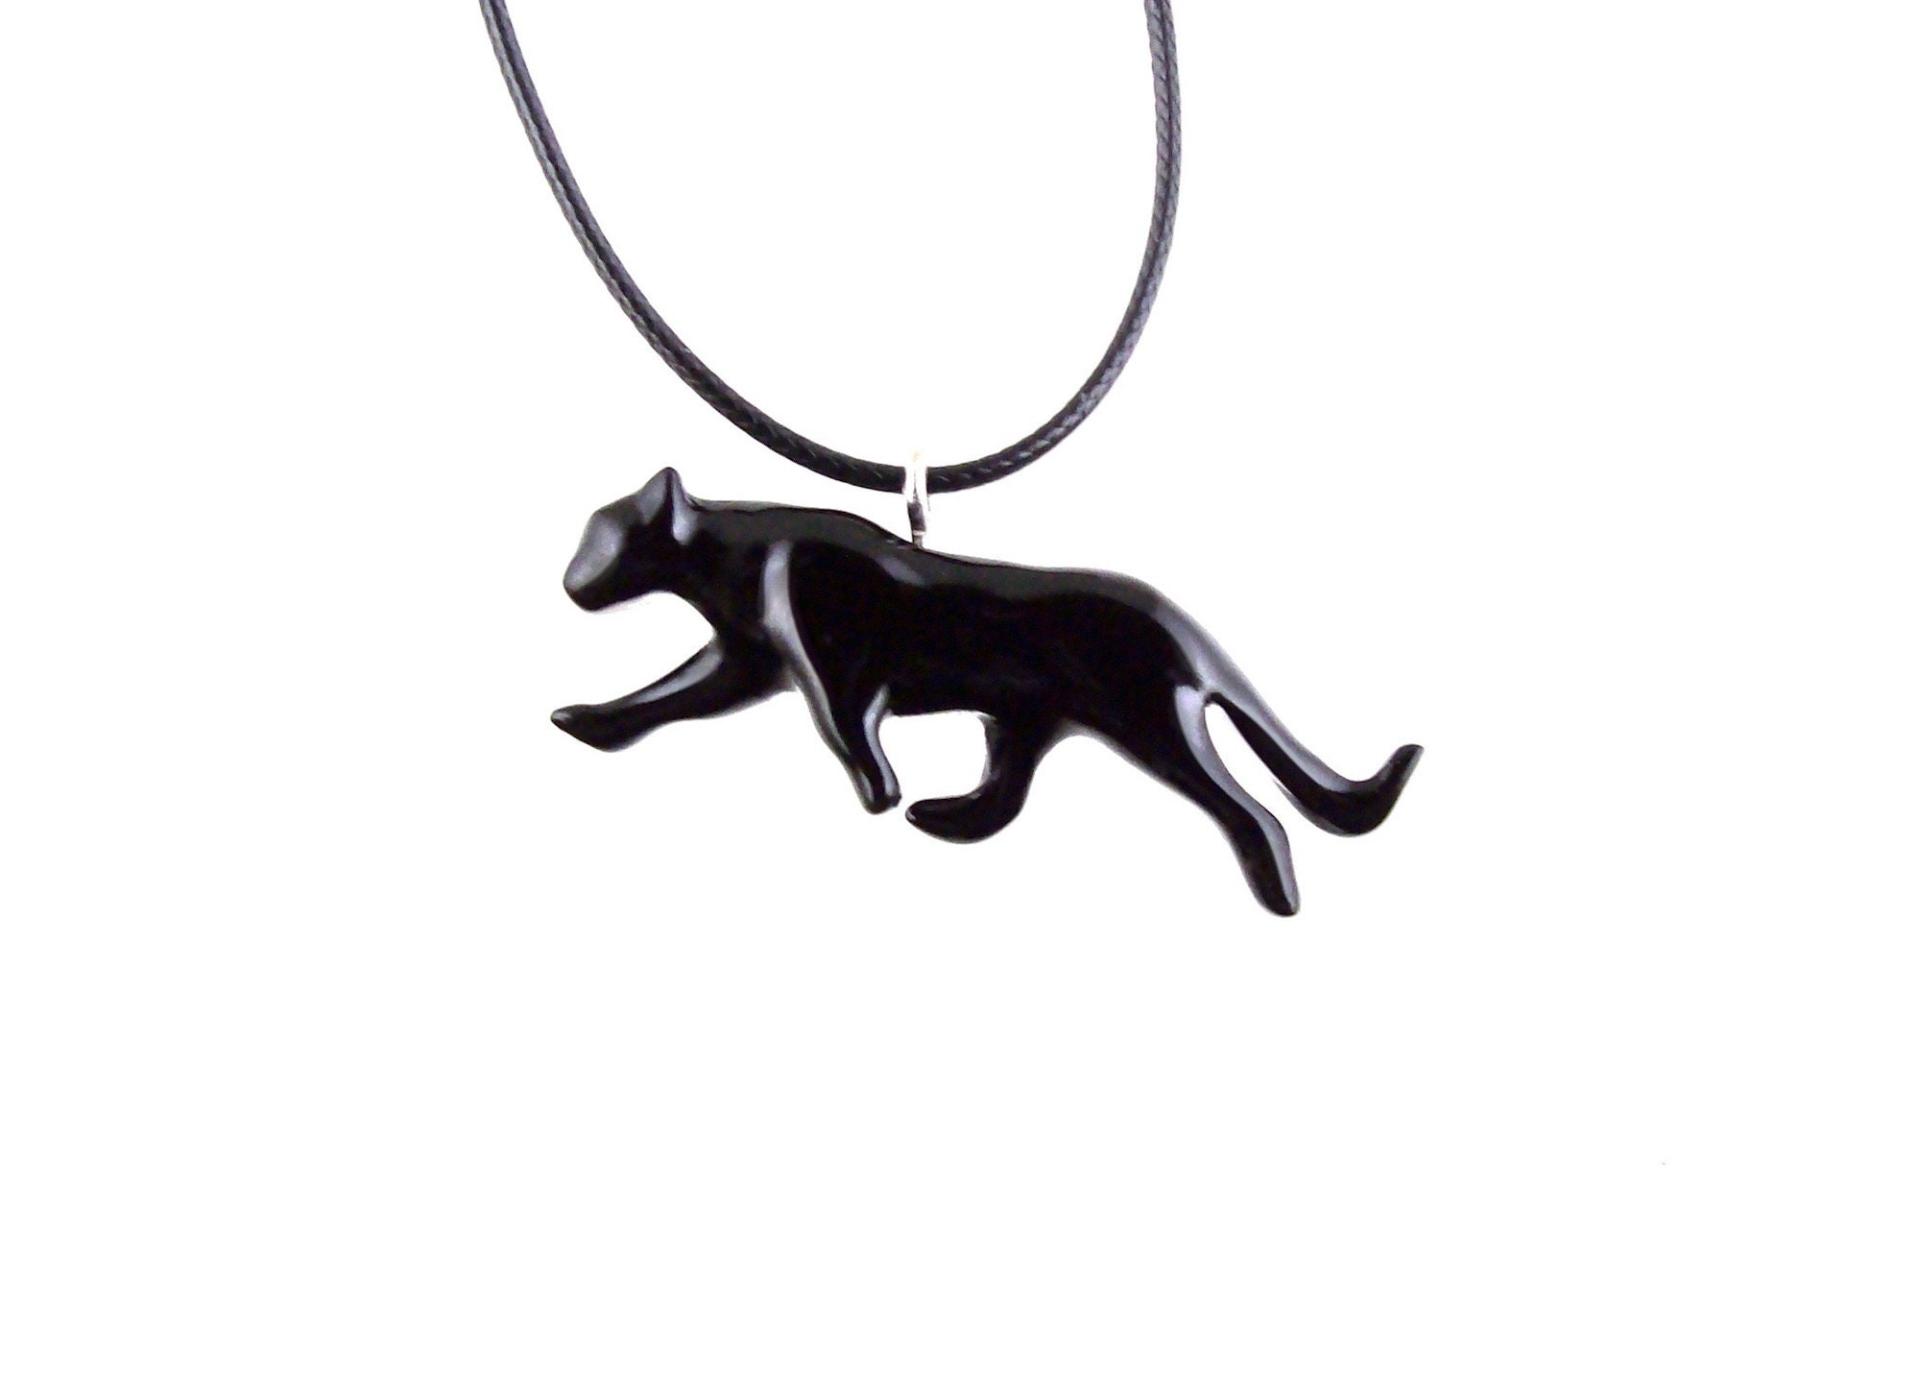 black jaguar pendant